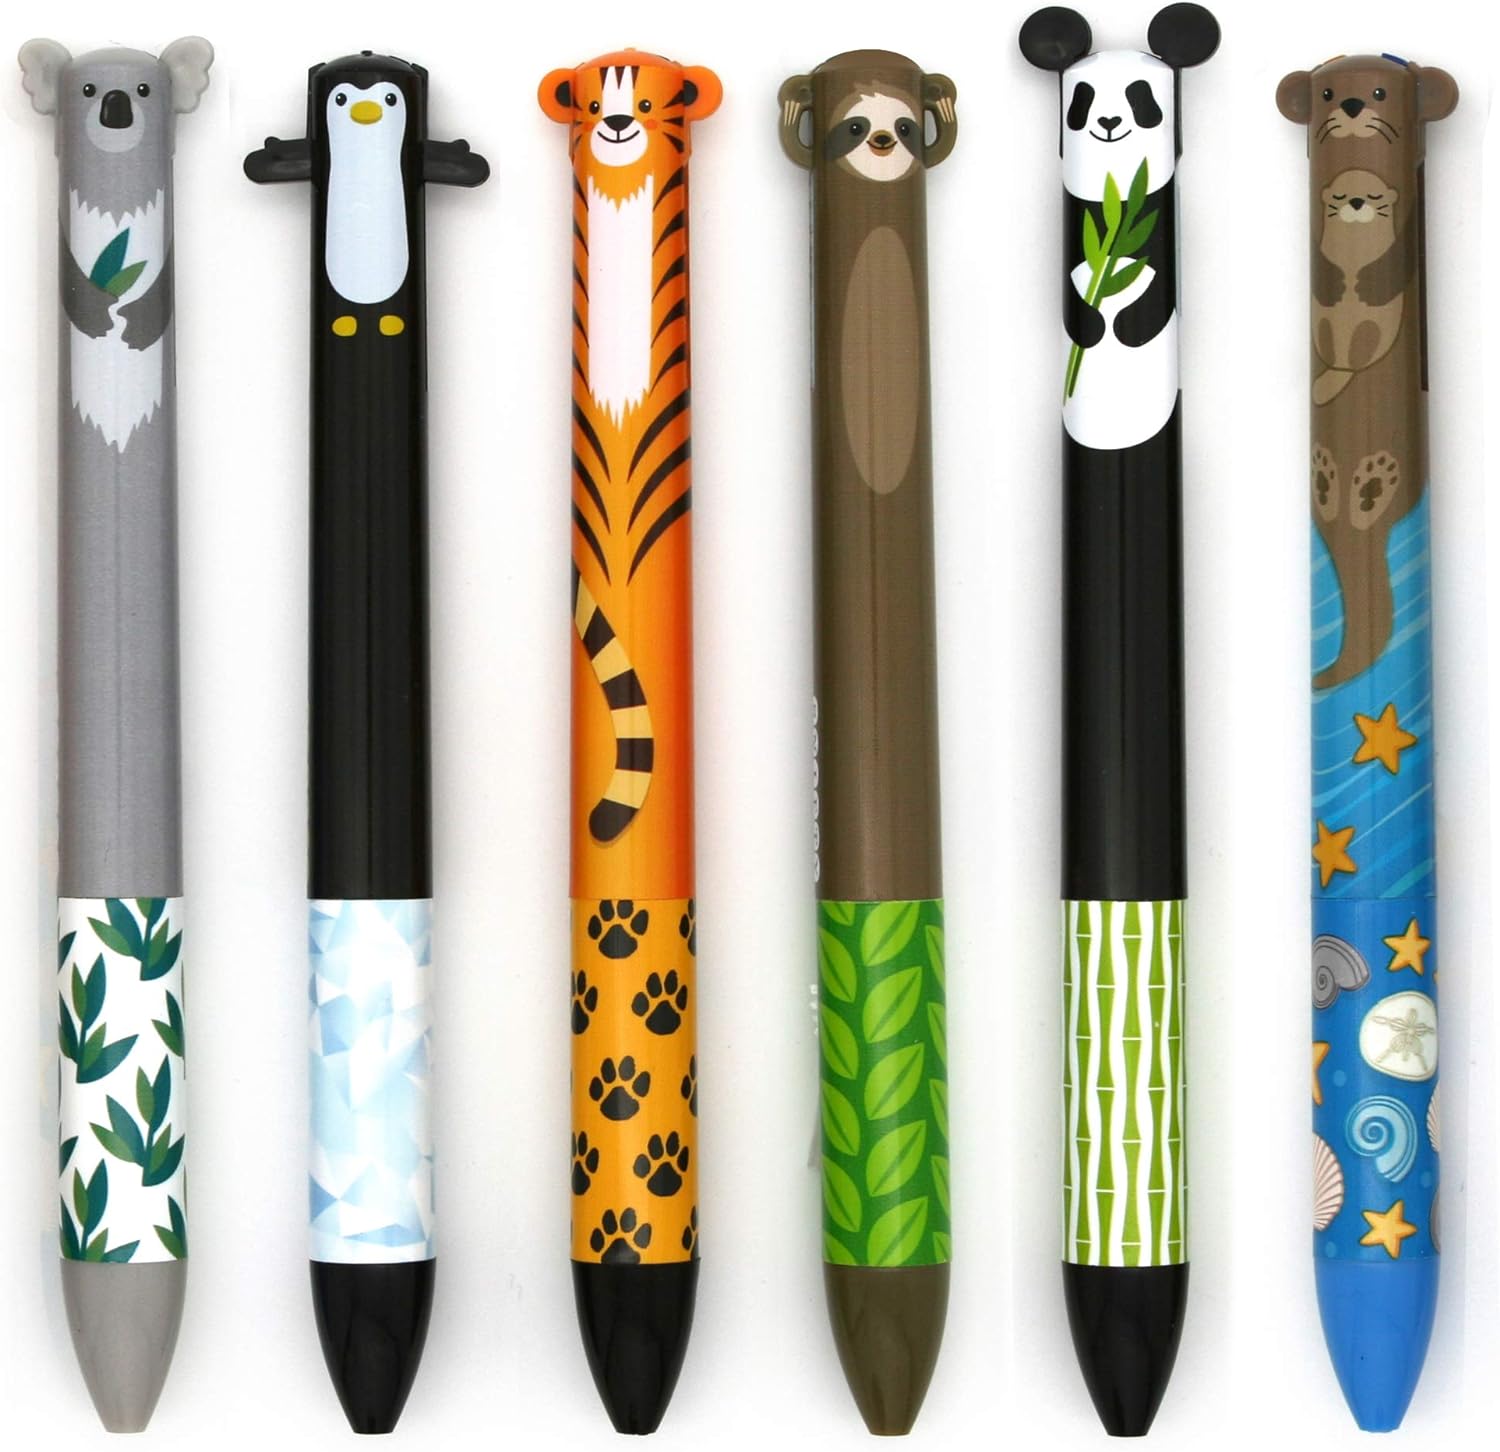 Cute Creatures Pens - Twice as